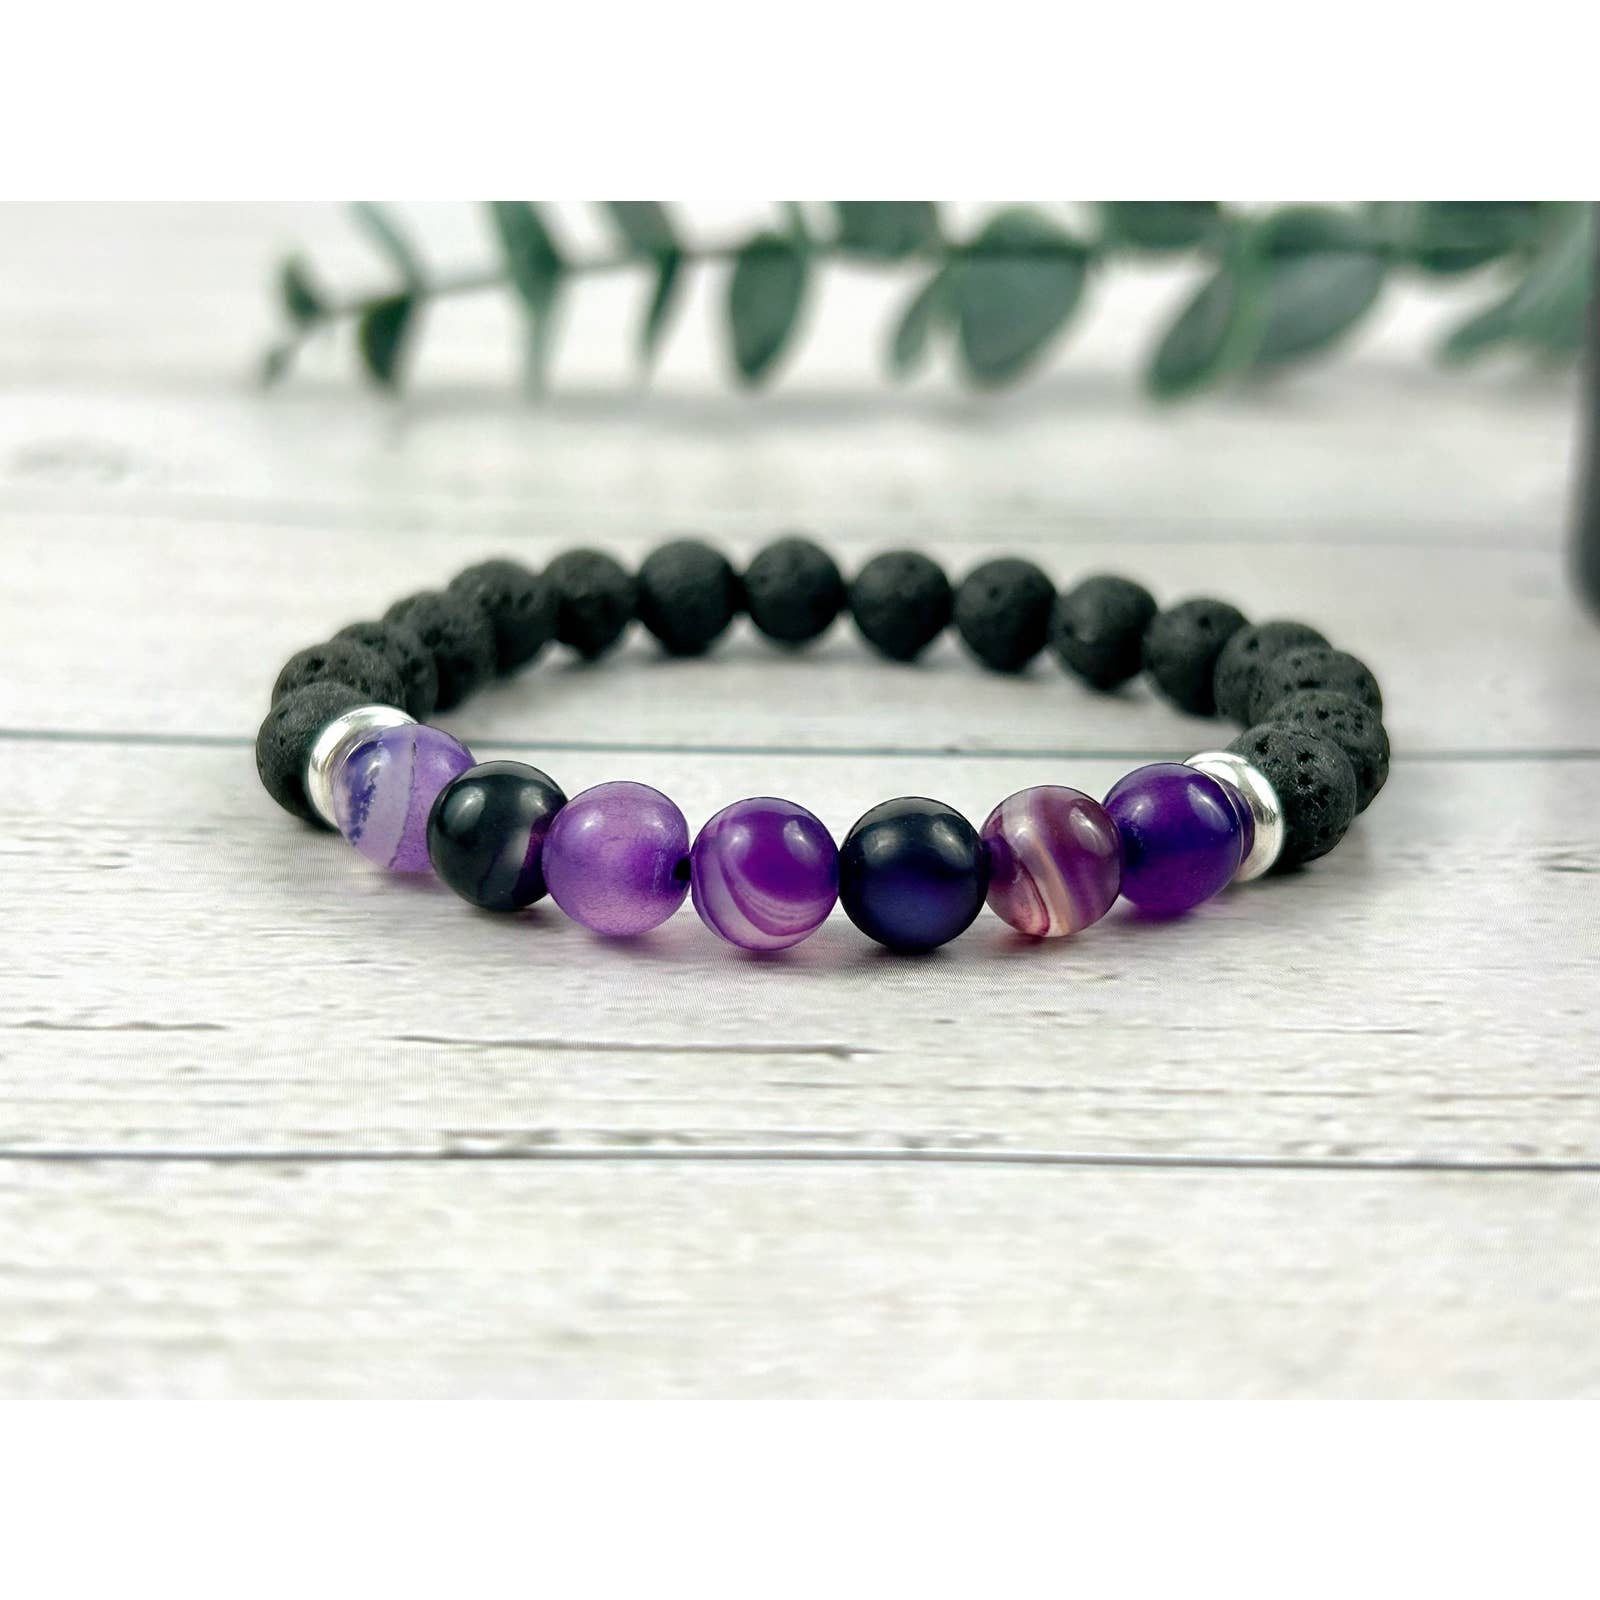 Oil Bracelet - Aromatherapy Bracelet with Purple Agate and Black Lava Rock Beads